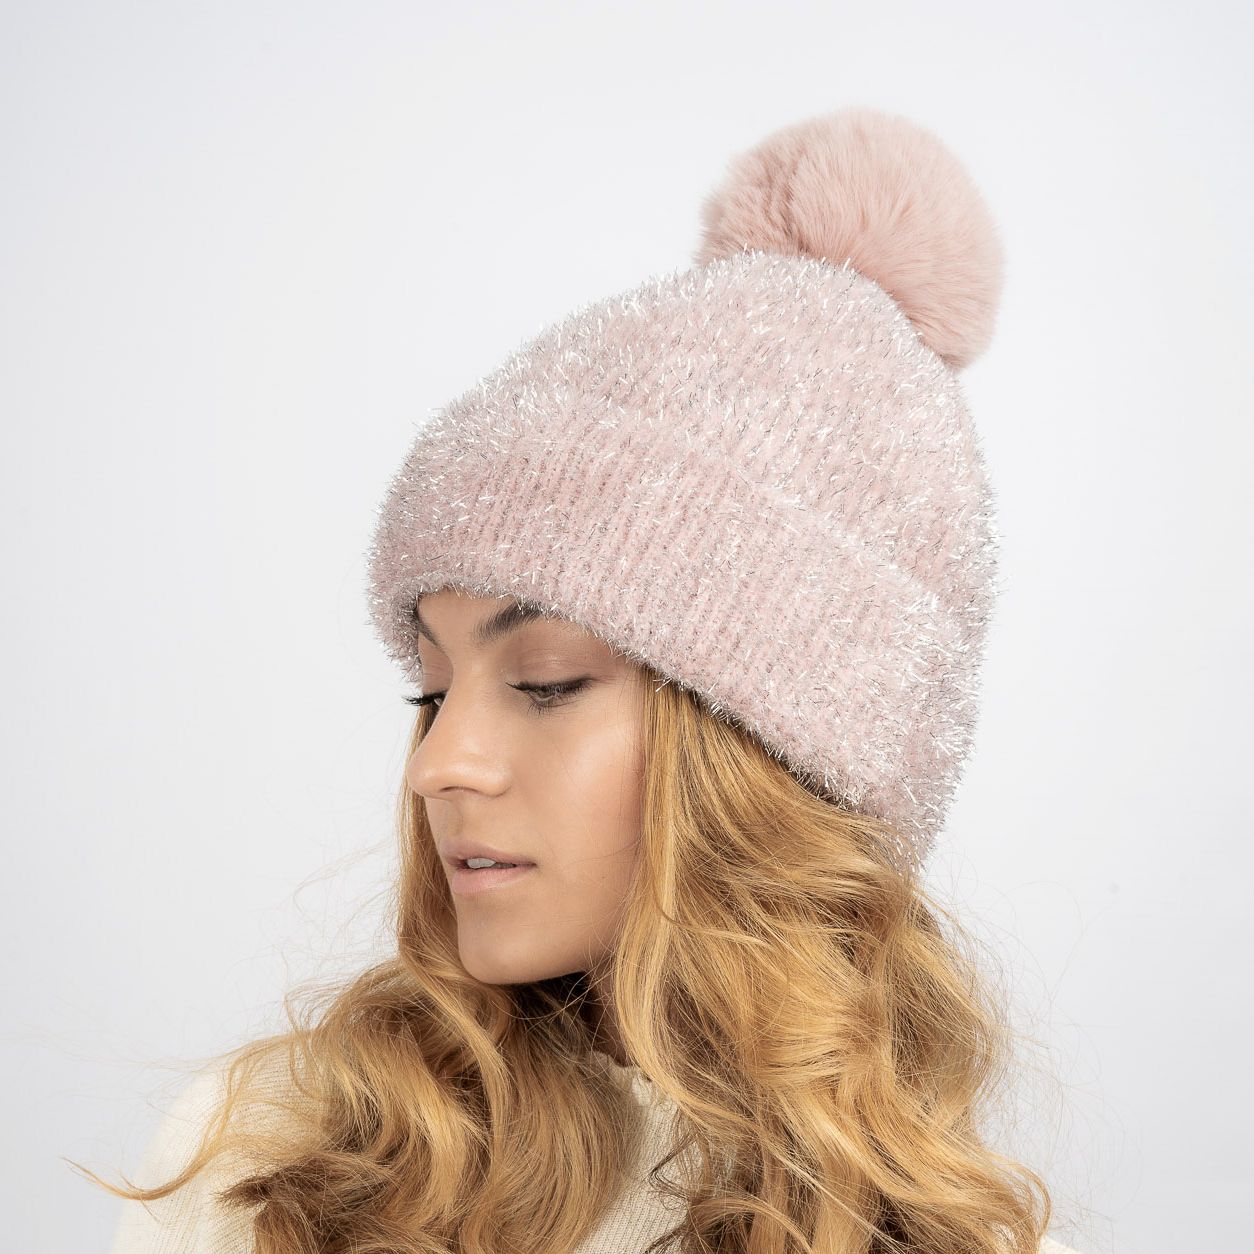 Freya Fluffy Glitter Fleece Lined Beanie - Pink - The Pretty Hat